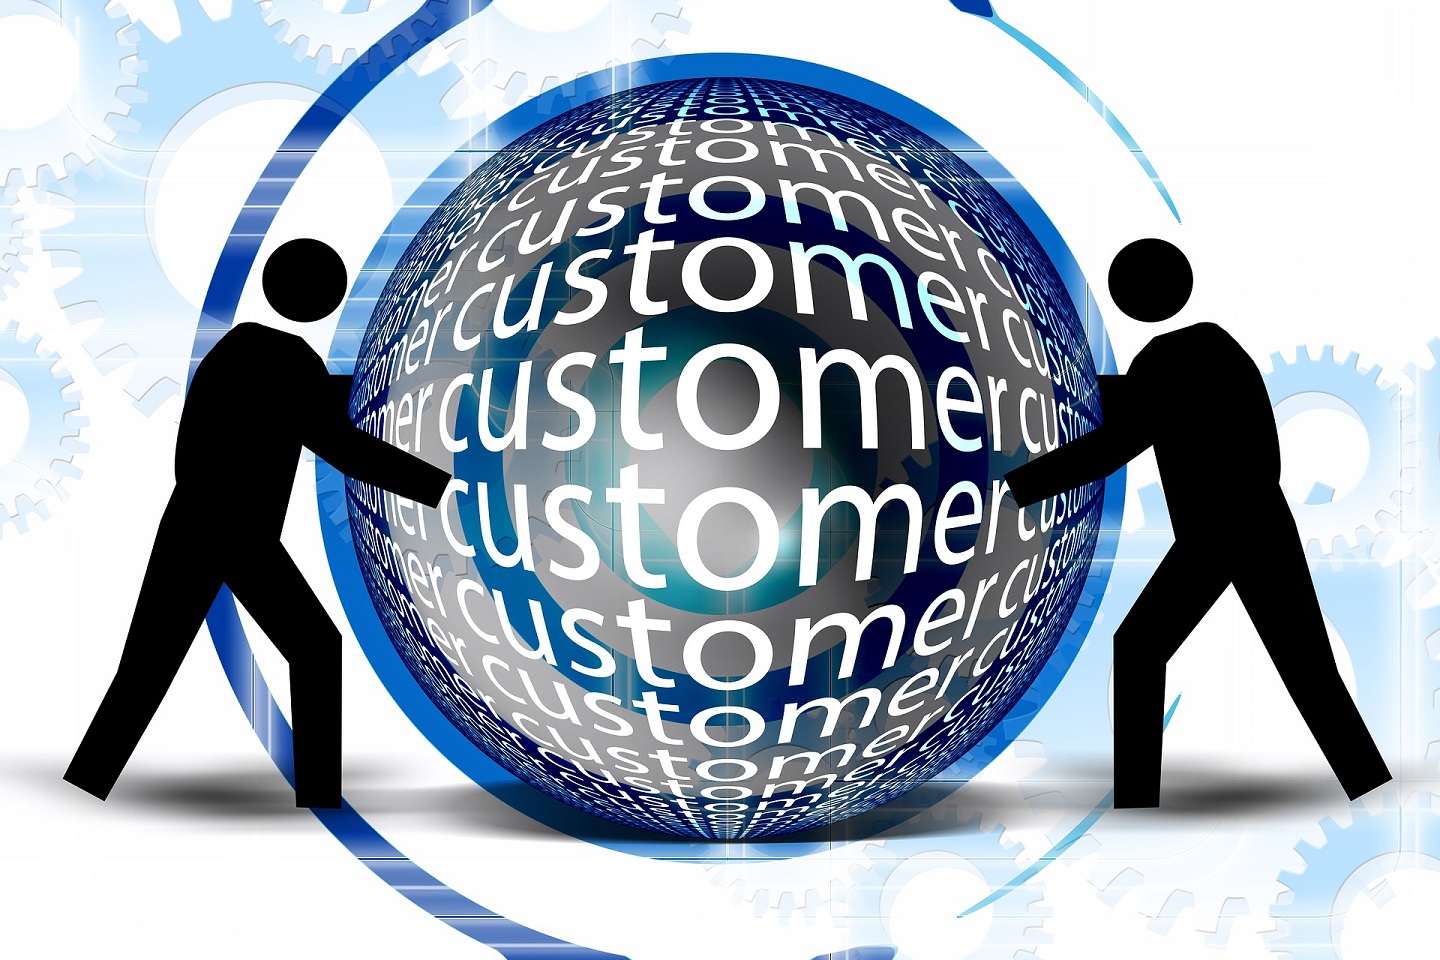 managing customer experience